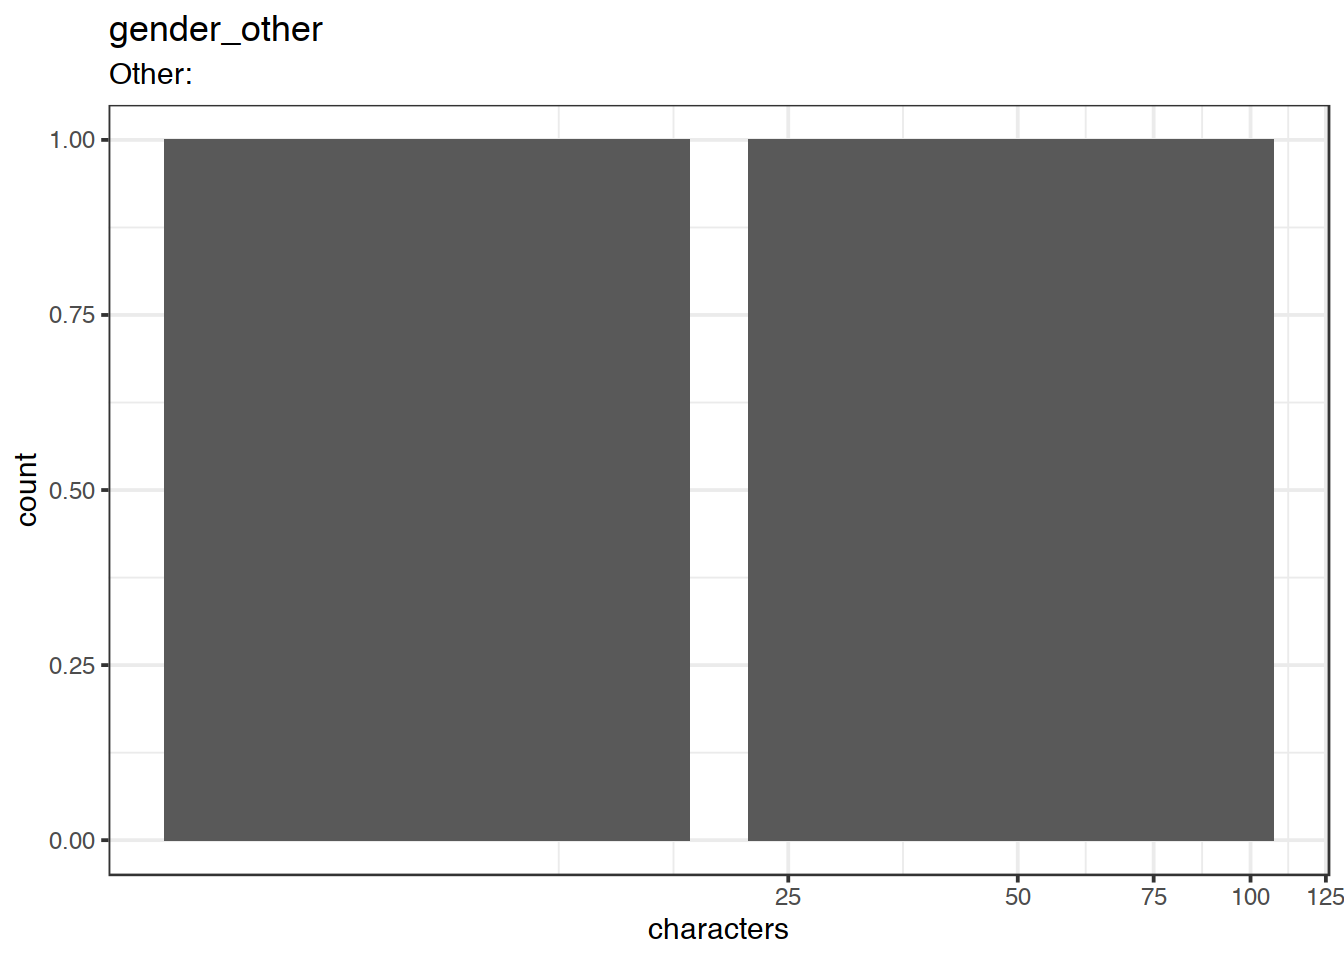 Distribution of values for gender_other